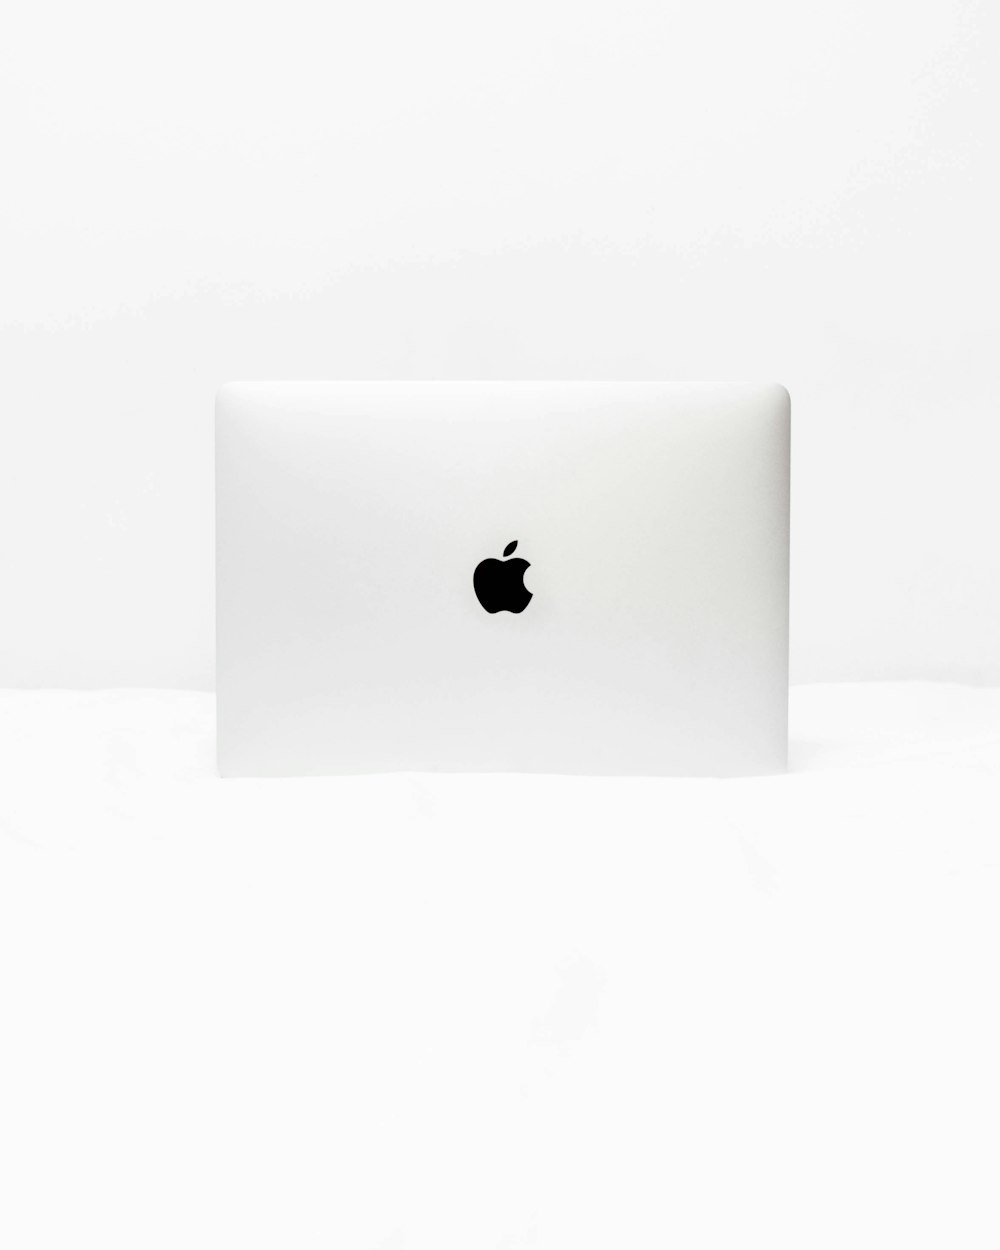 MacBook Whiteを白い表面に開いた状態